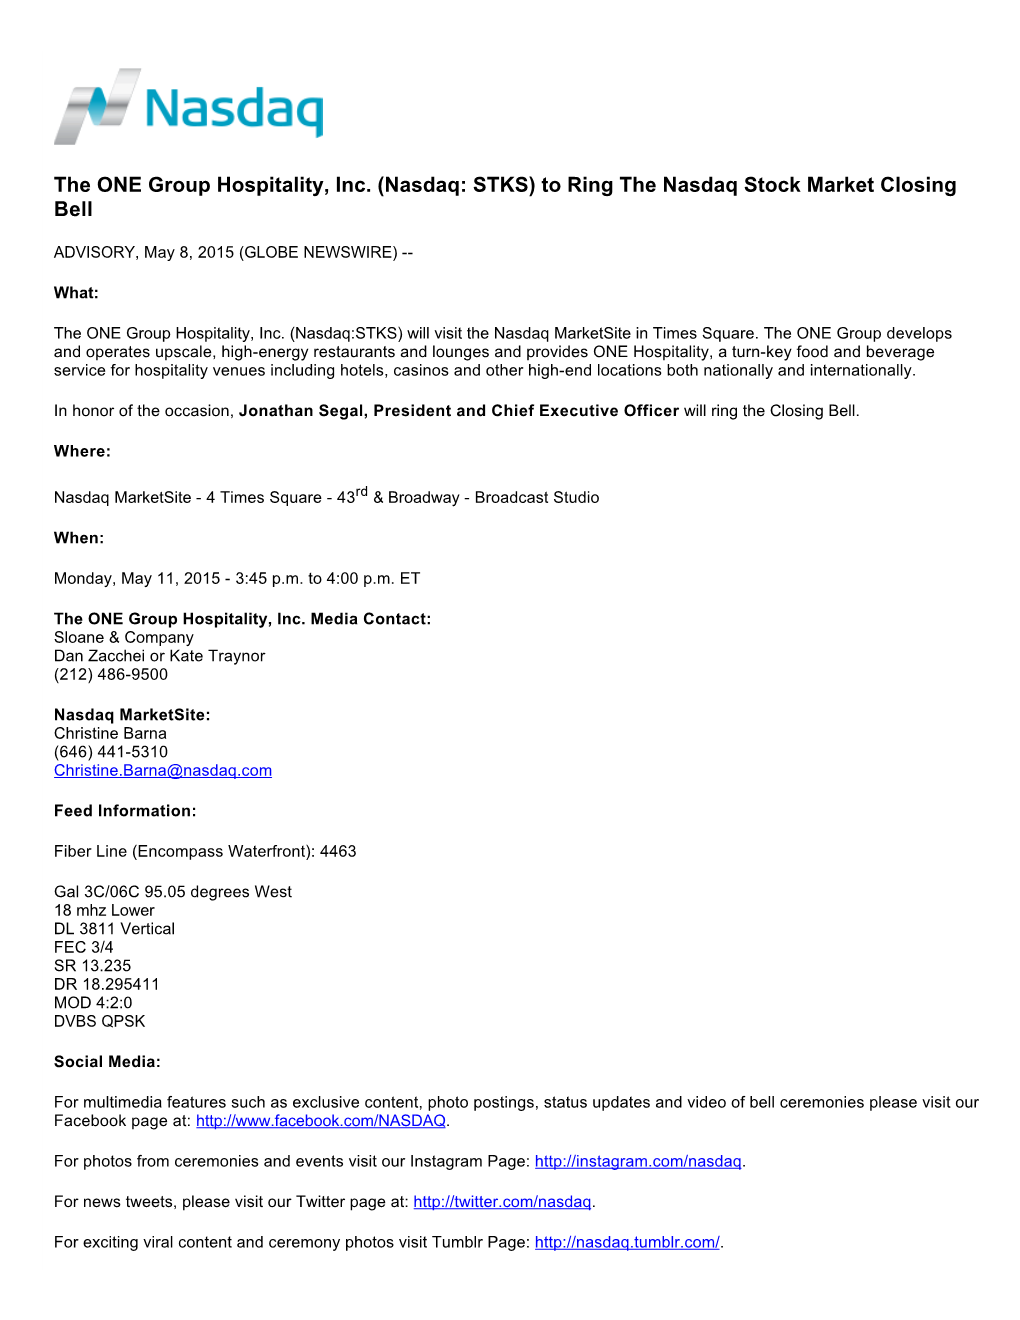 The ONE Group Hospitality, Inc. (Nasdaq: STKS) to Ring the Nasdaq Stock Market Closing Bell